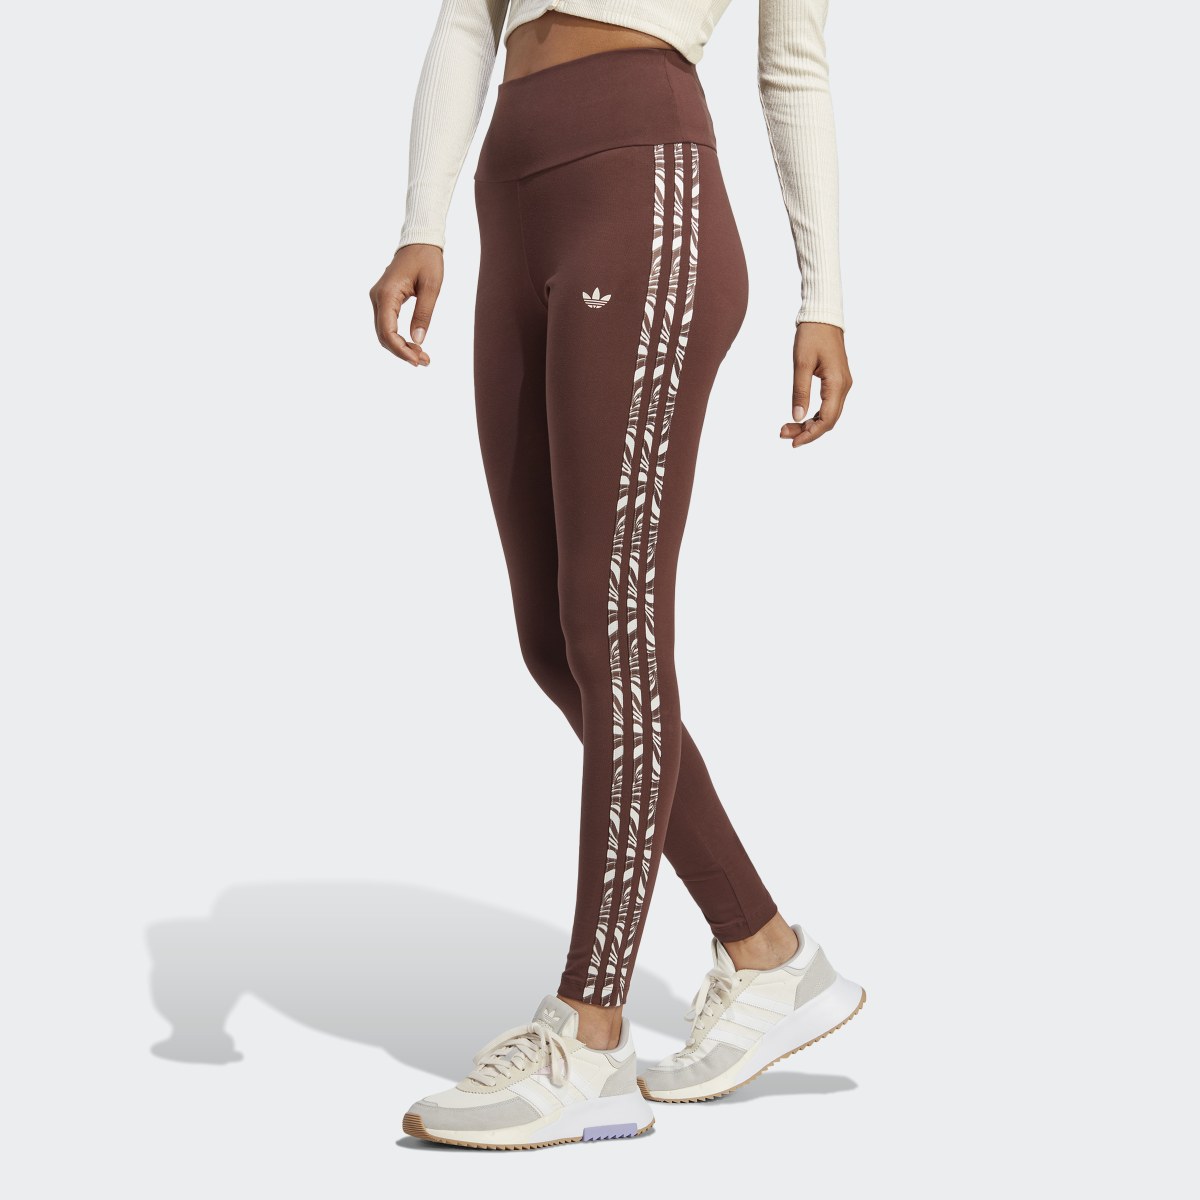 Adidas Originals All Over Leopard Print Leggings In Brown for Women